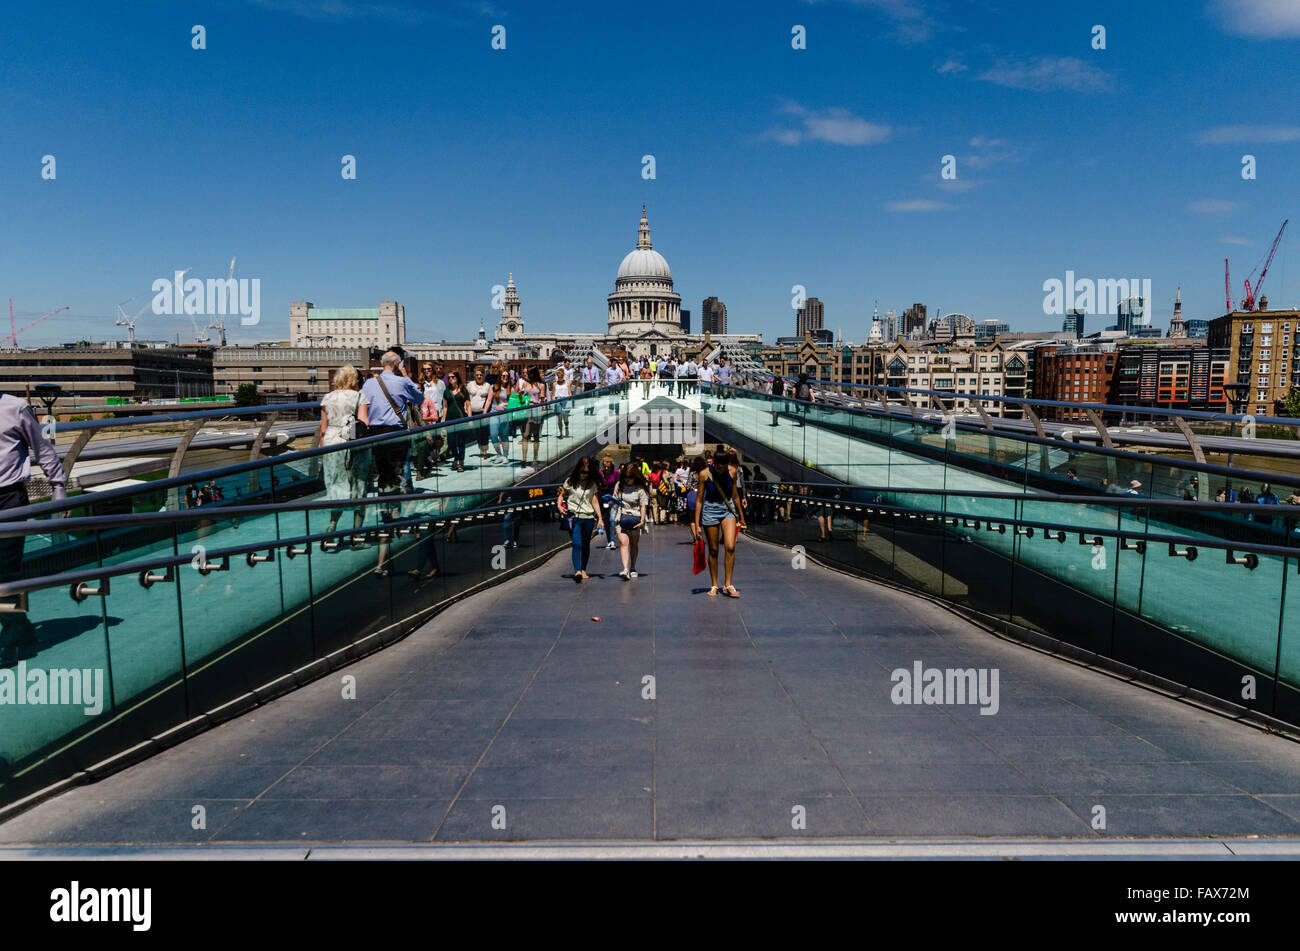 People walking over London Millennium Footbridge. Saint Pauls Cathedral in view. Stock Photo